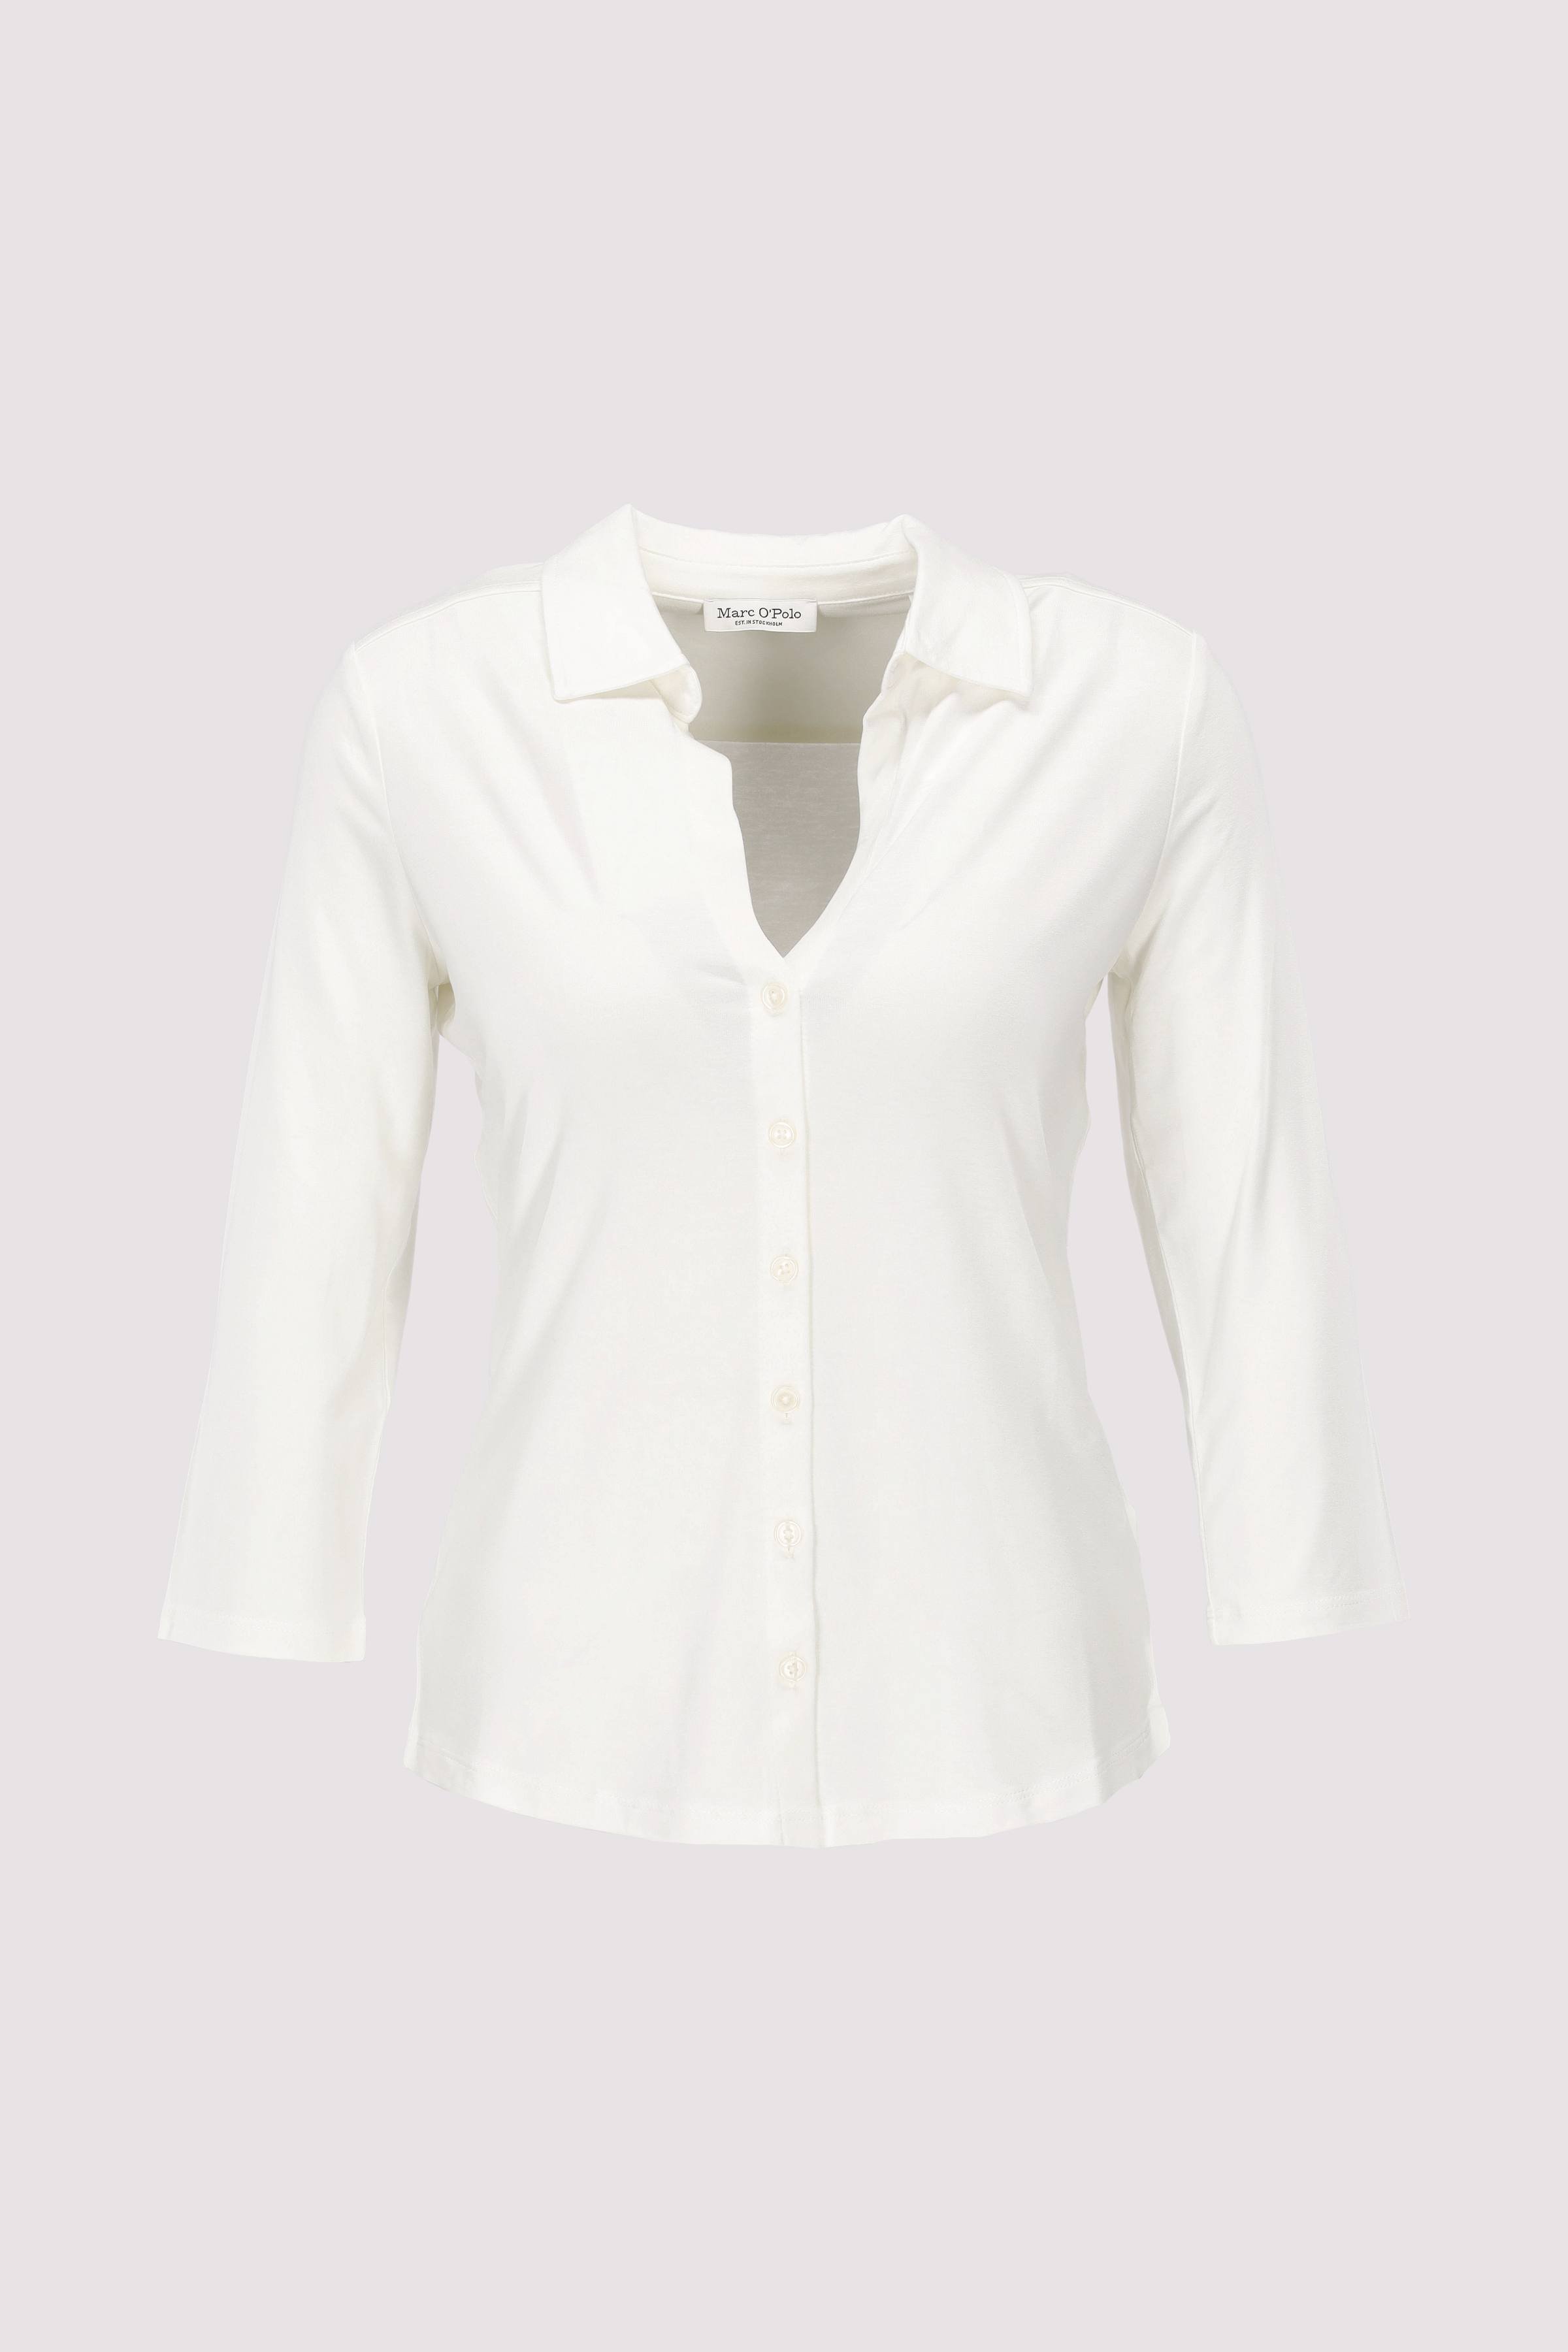 Jersey blouse, 3 4 sleeve, cla